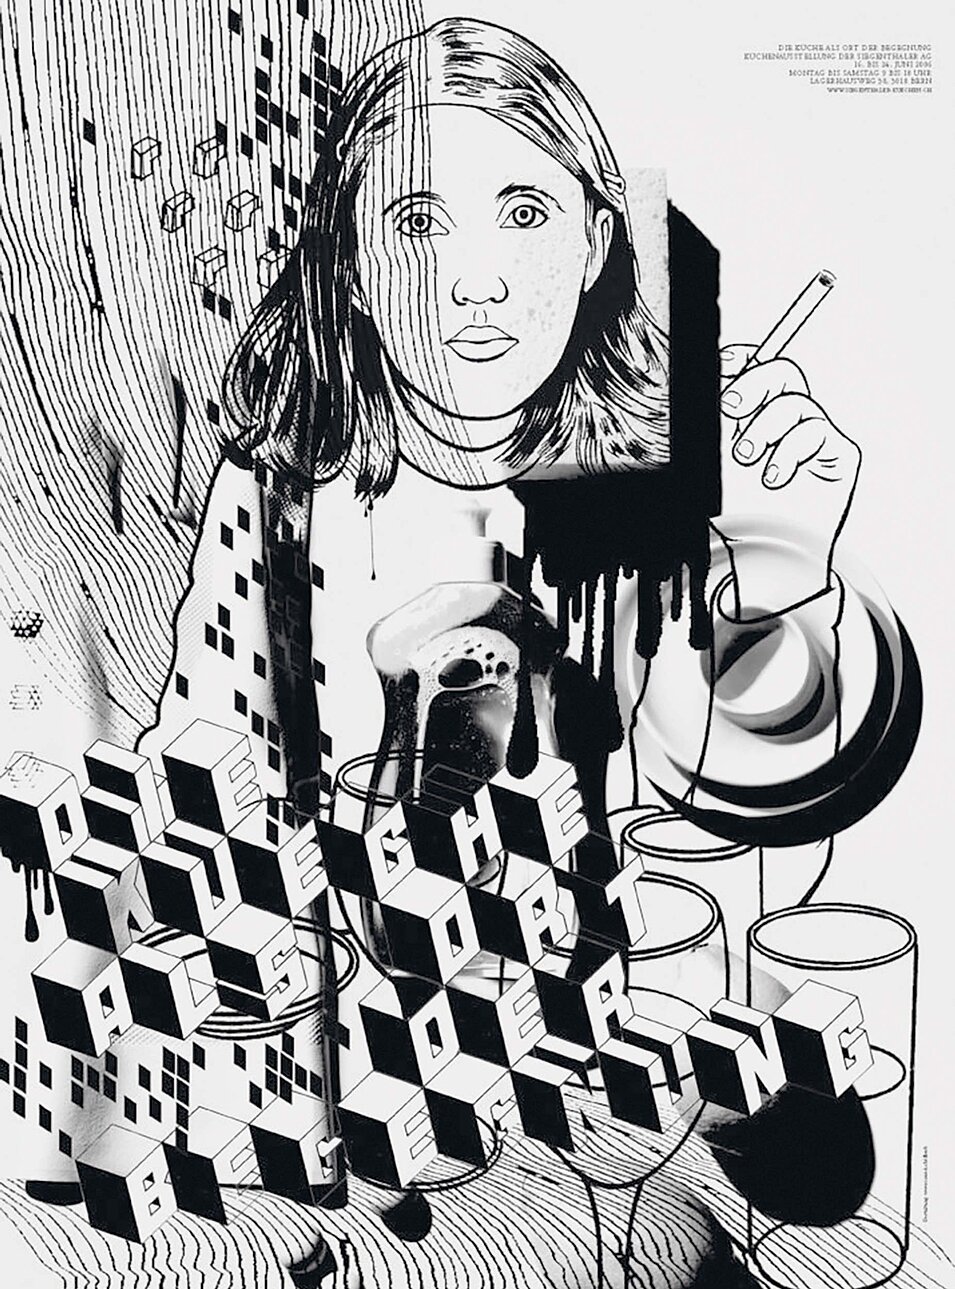 poster illustration black and white girl with cigarette design bern